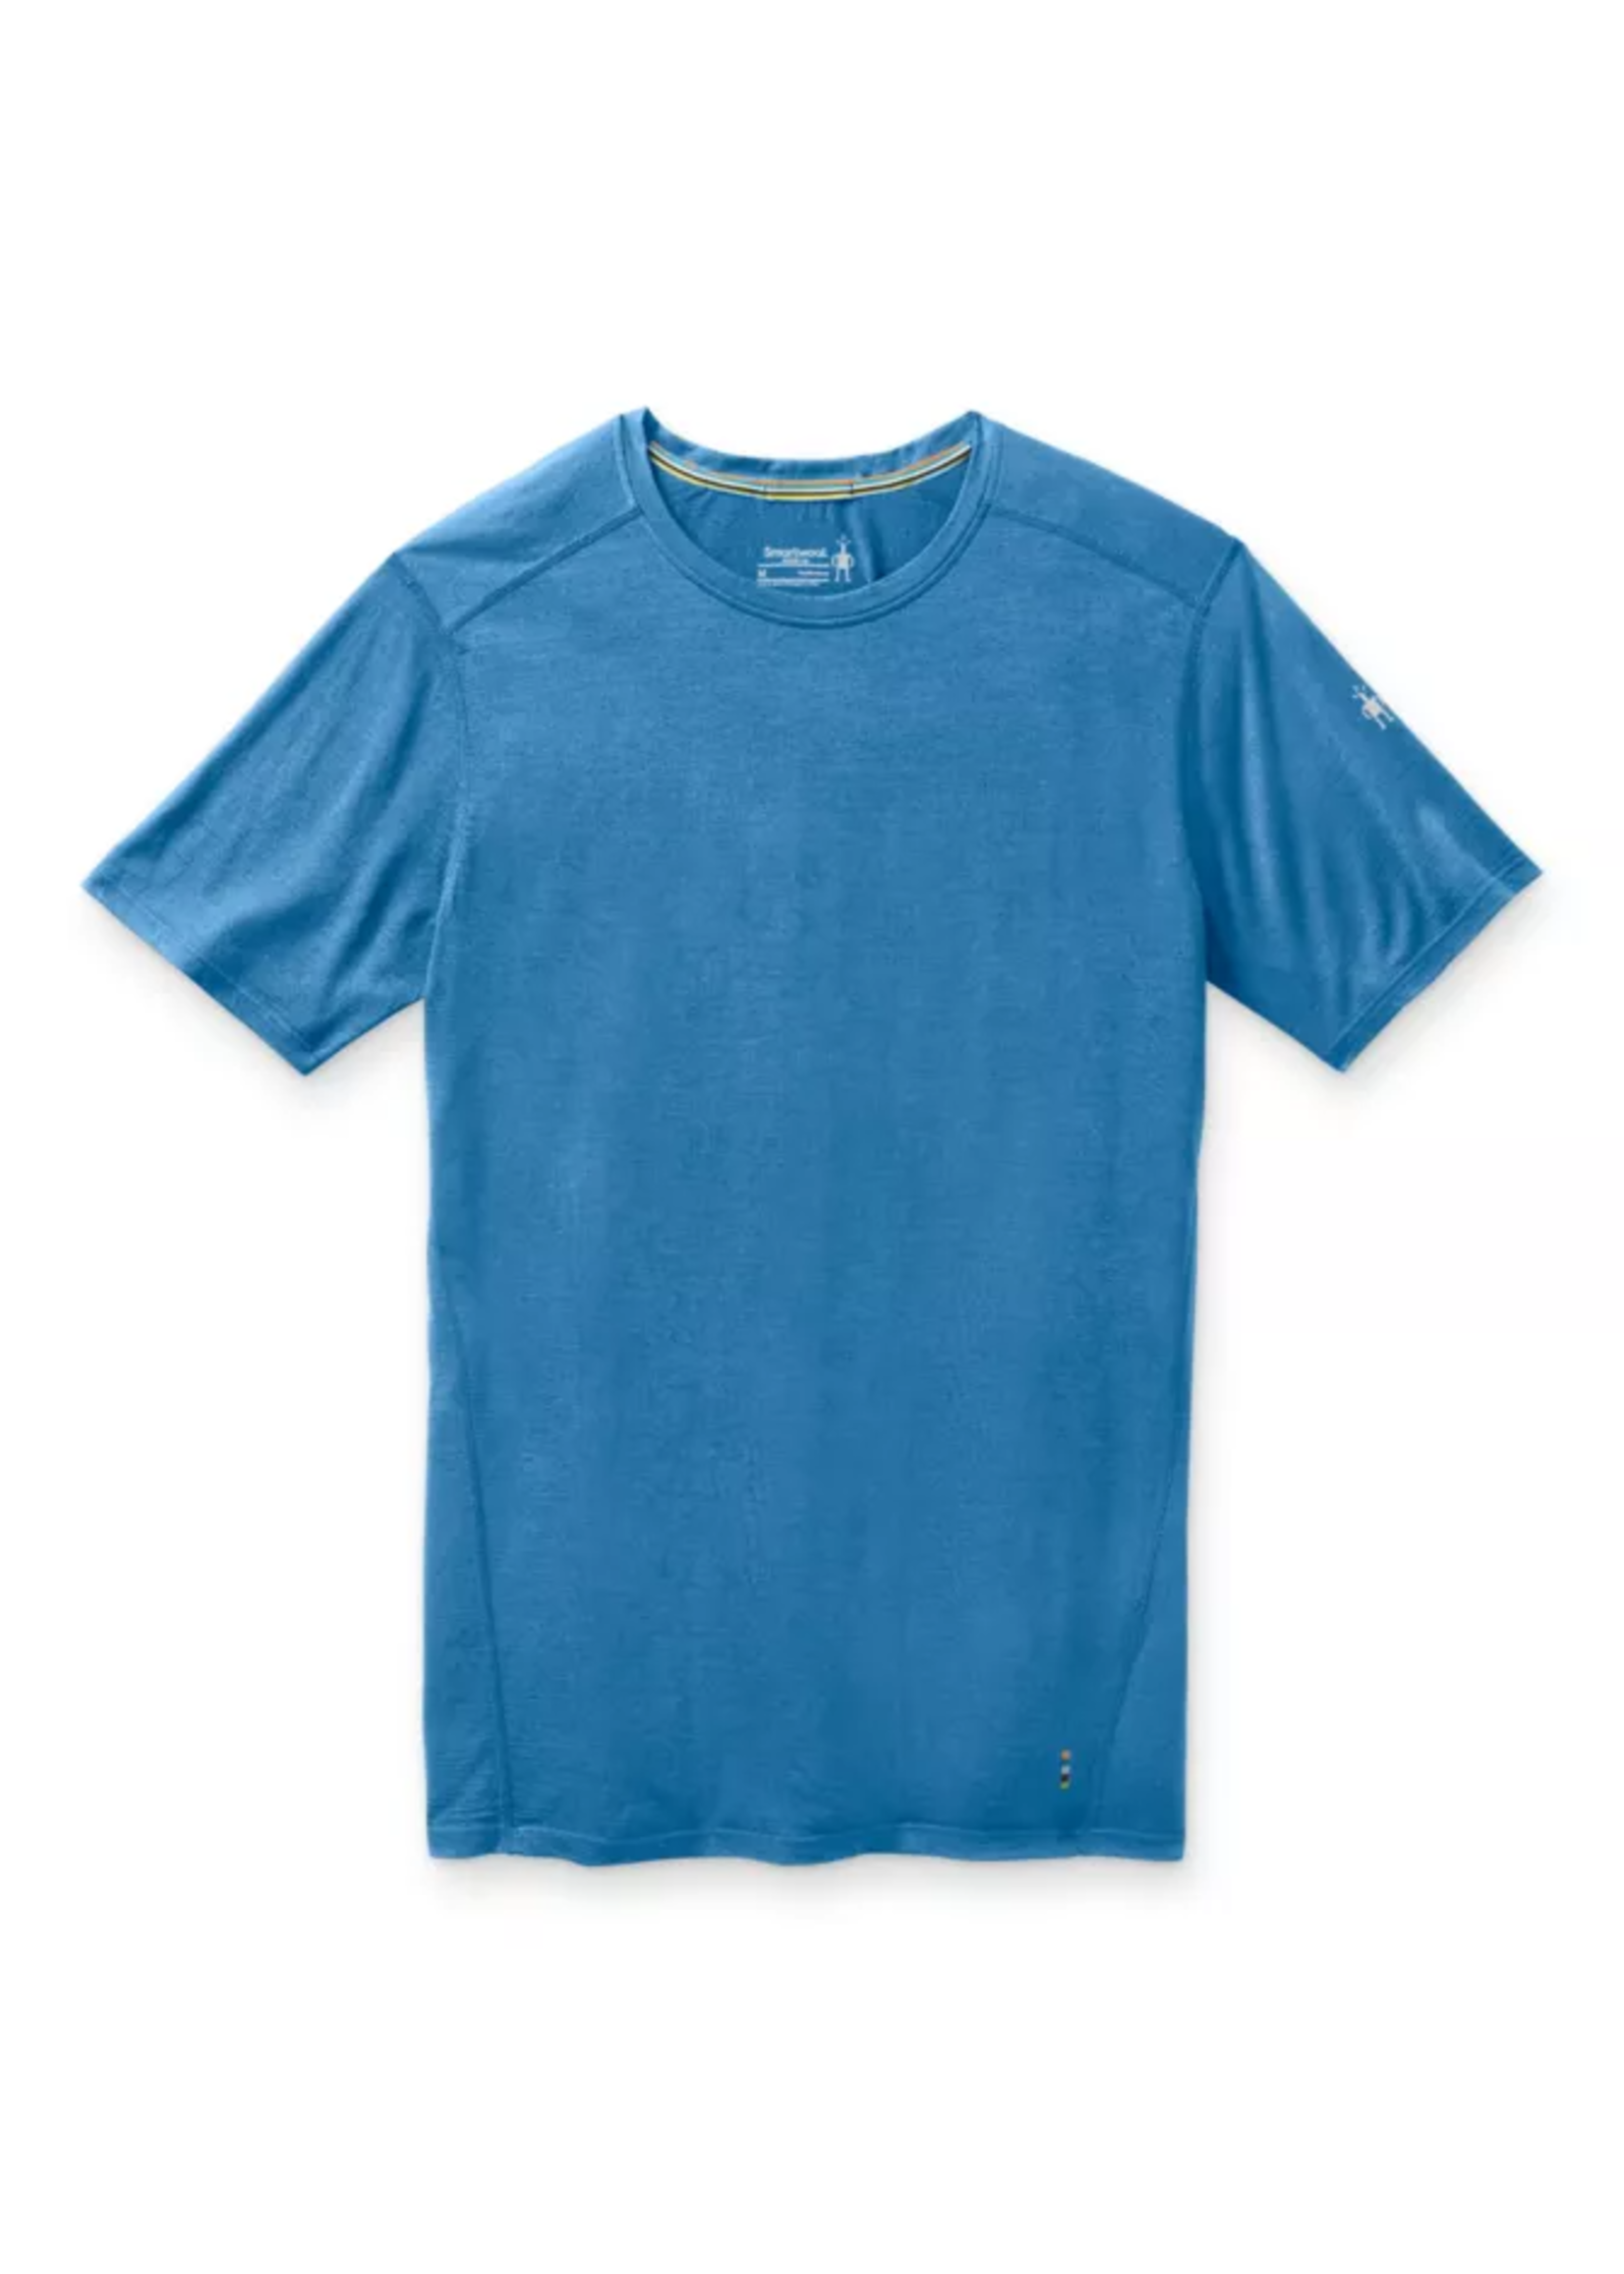 Smartwool Men's Merino 150 Baselayer Short Sleeve Ocean Blue